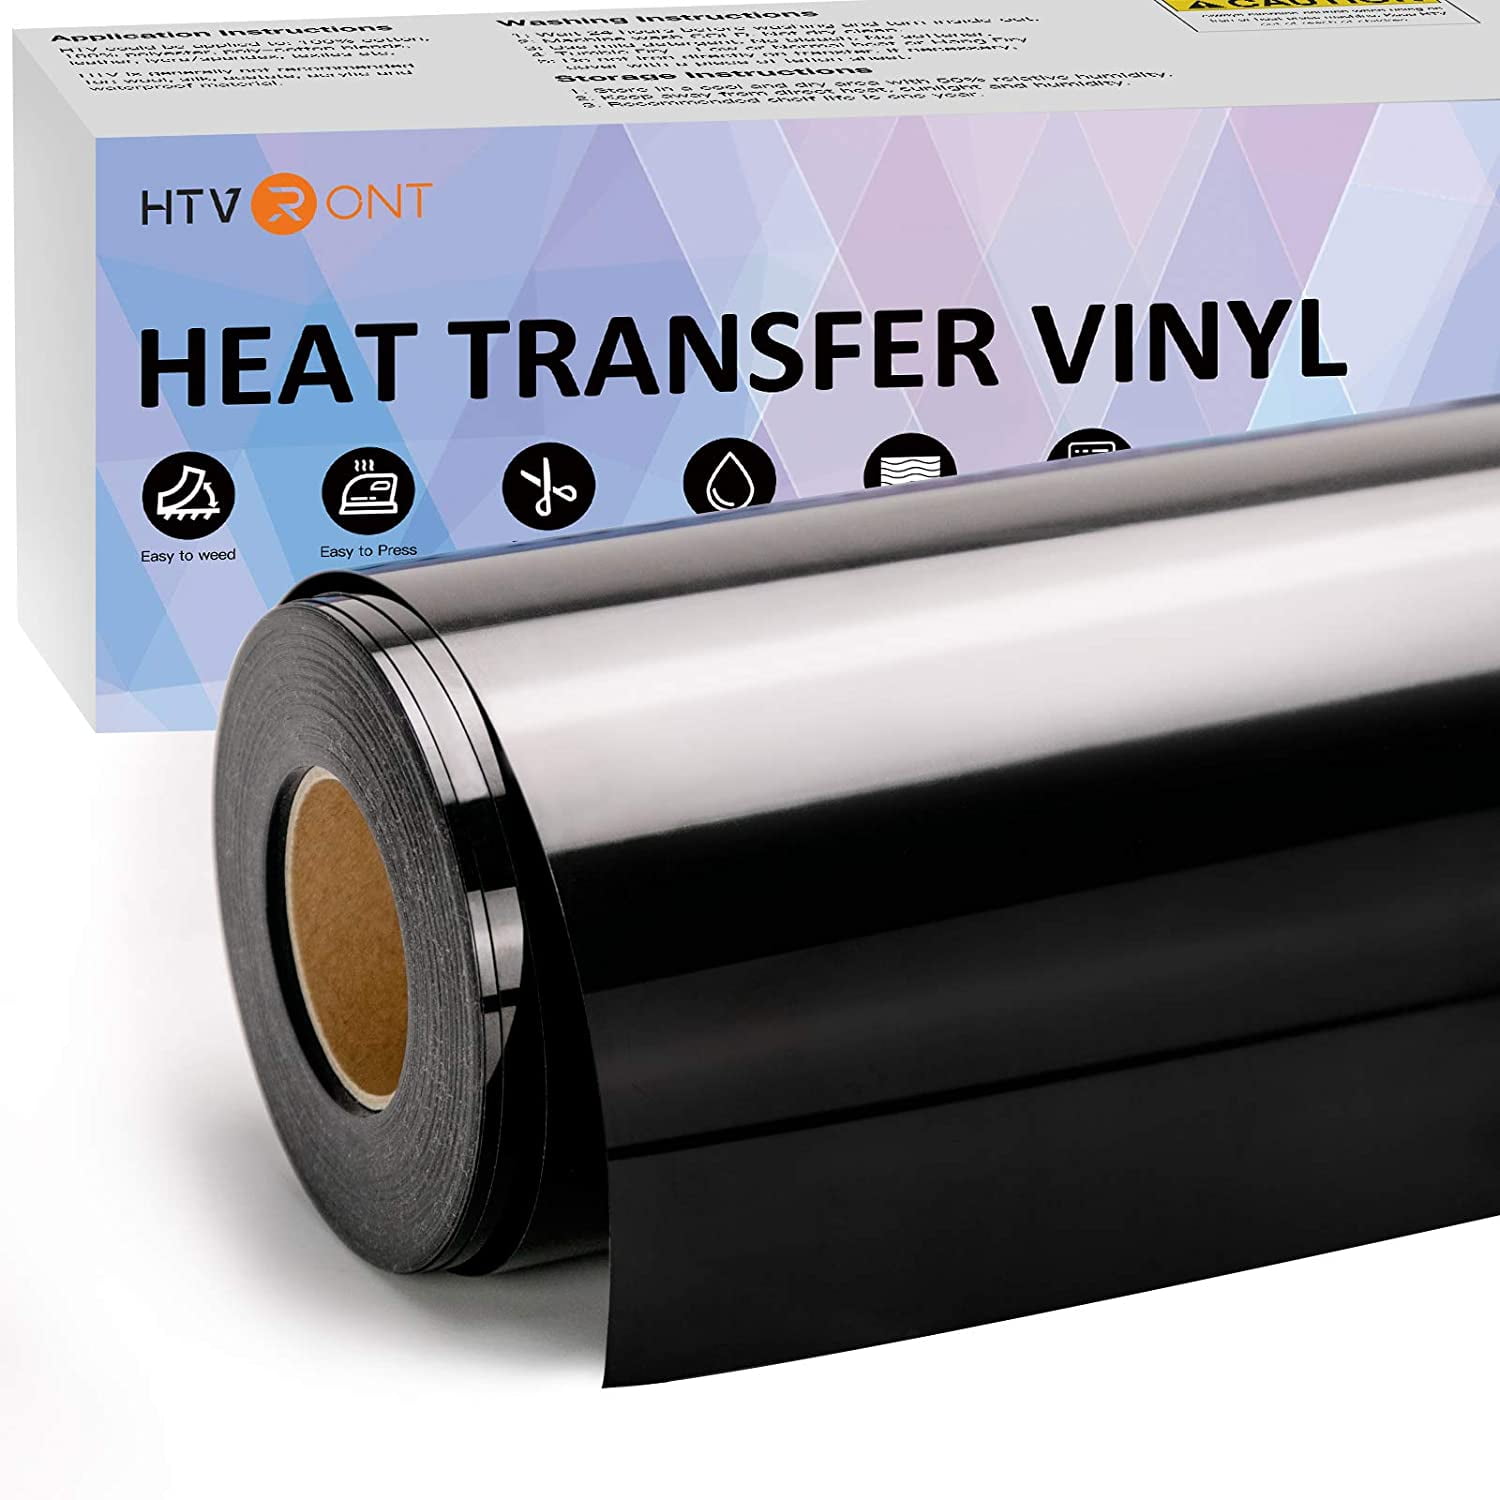 VinylRus Heat Transfer Vinyl-12 x 25ft White Iron on Vinyl Roll for Shirts, HTV  Vinyl for Silhouette Cameo, Cricut, Easy to Cut & Weed